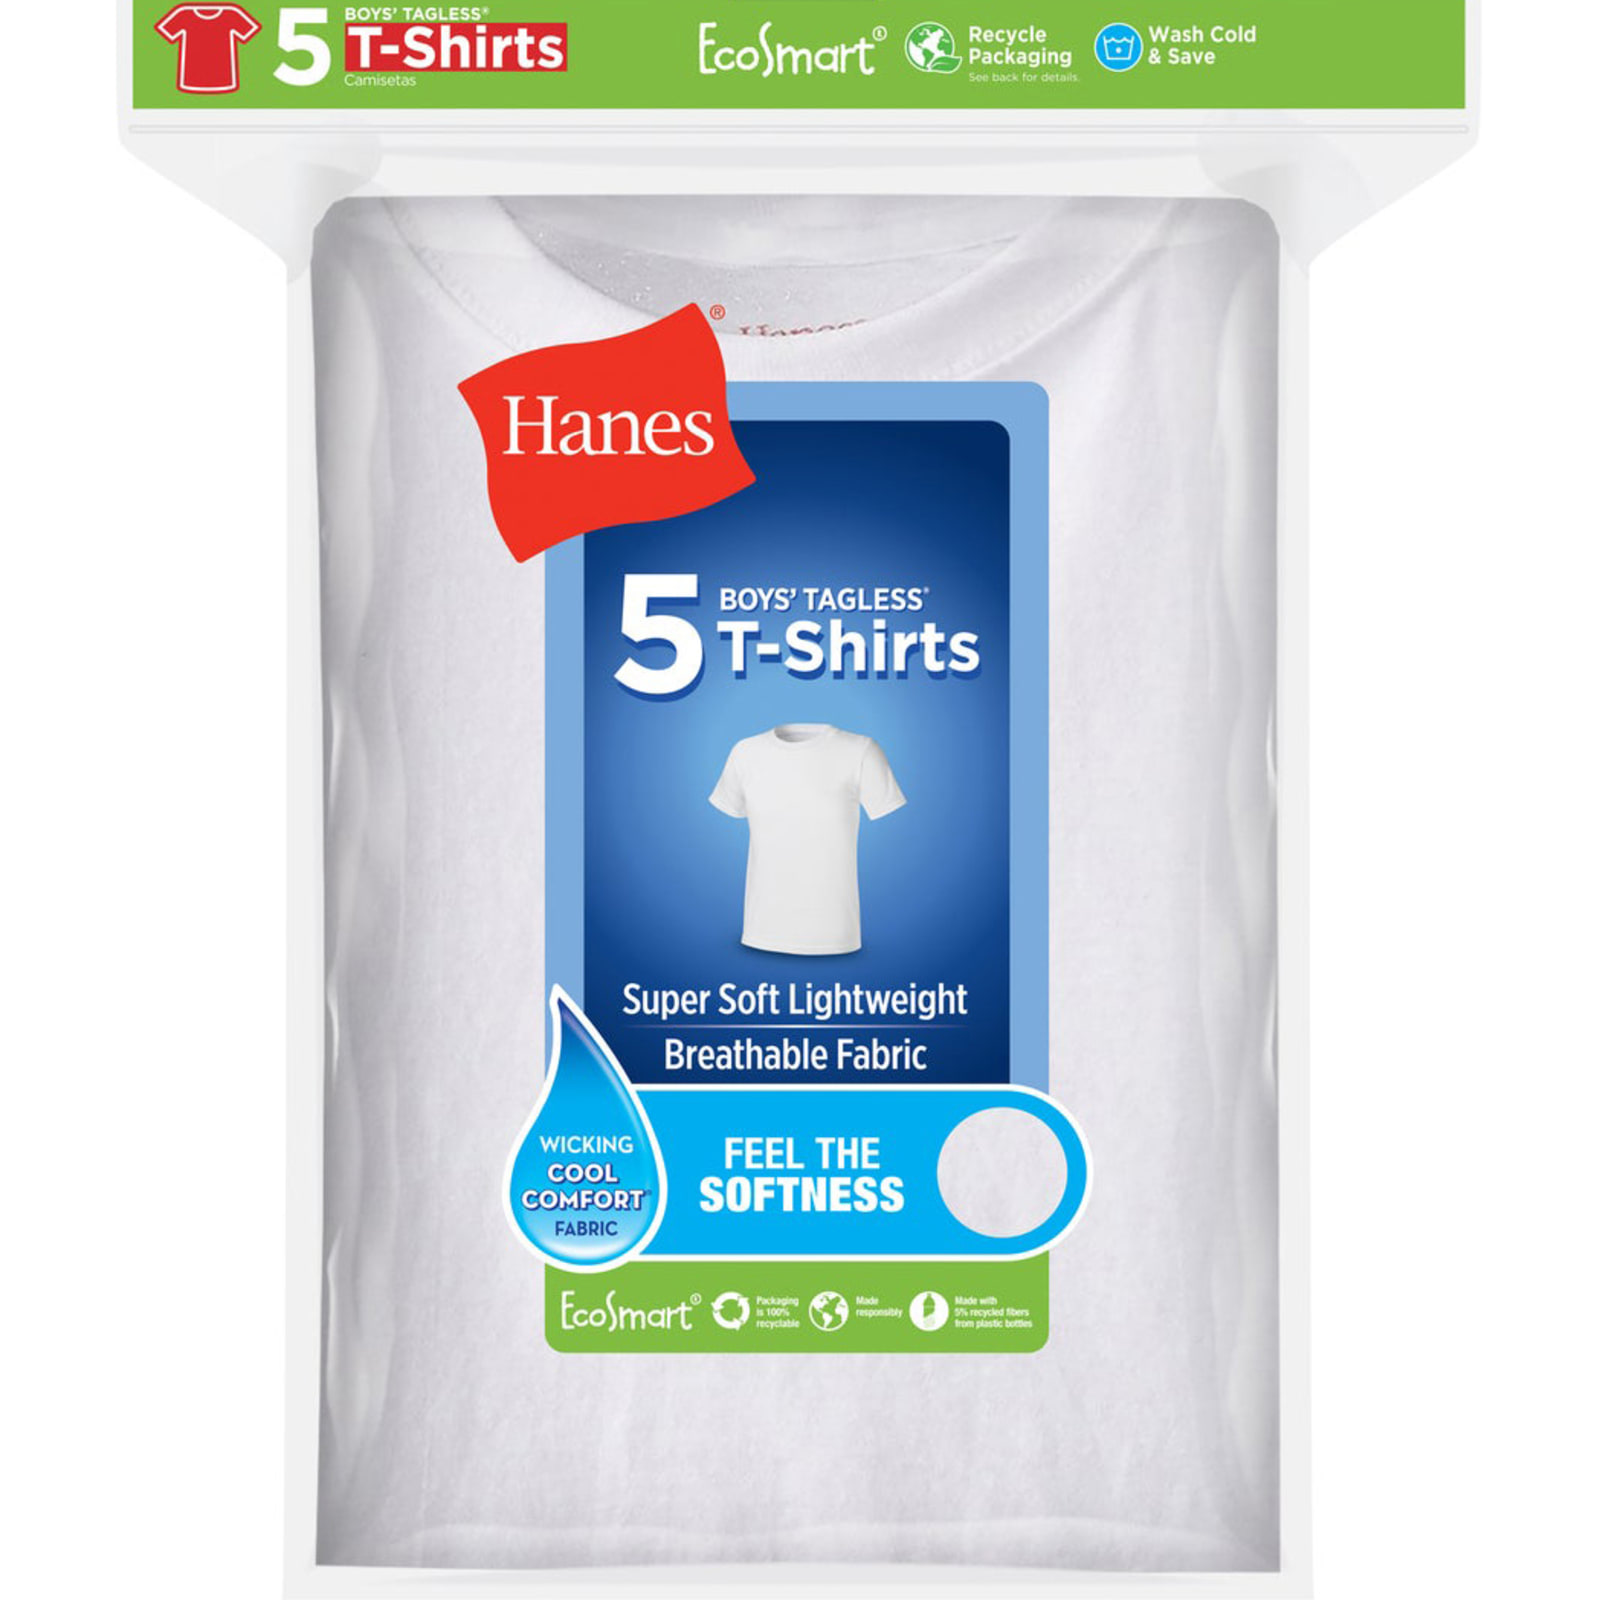 Hanes Men's EcoSmart Short Sleeve T-Shirt